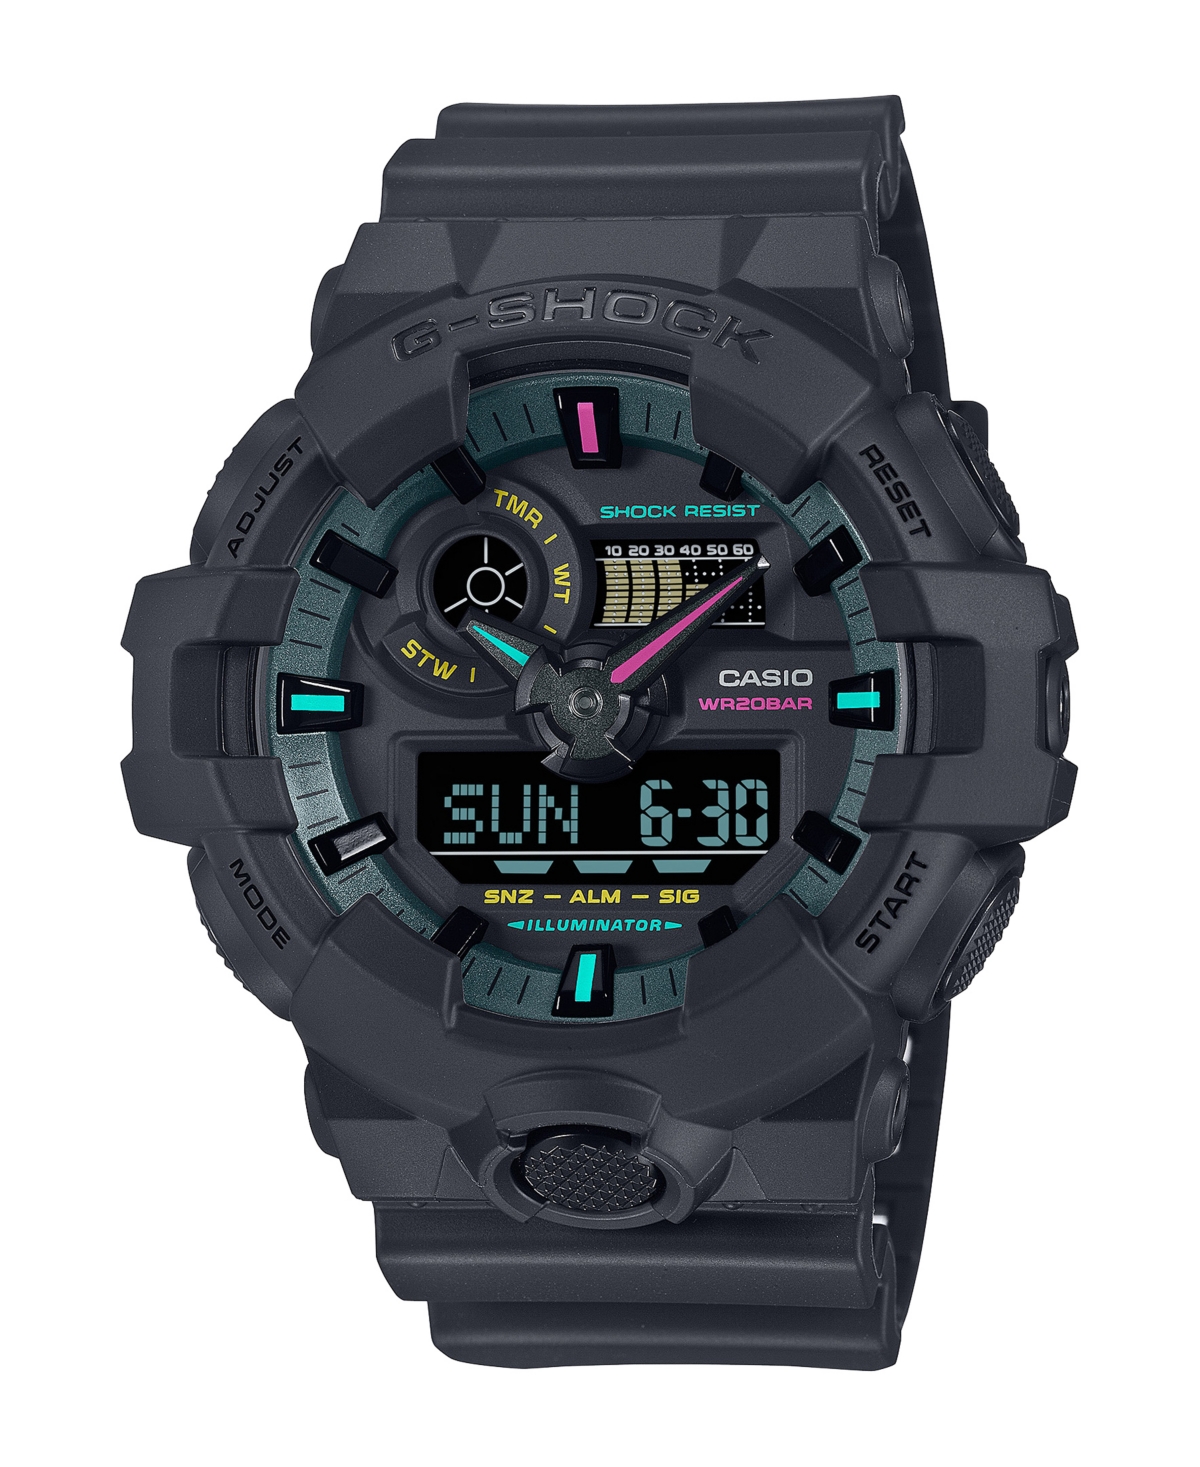 Mens Analog Digital Black Resin Watch, 57.5mm, GA700MF-1A - Black